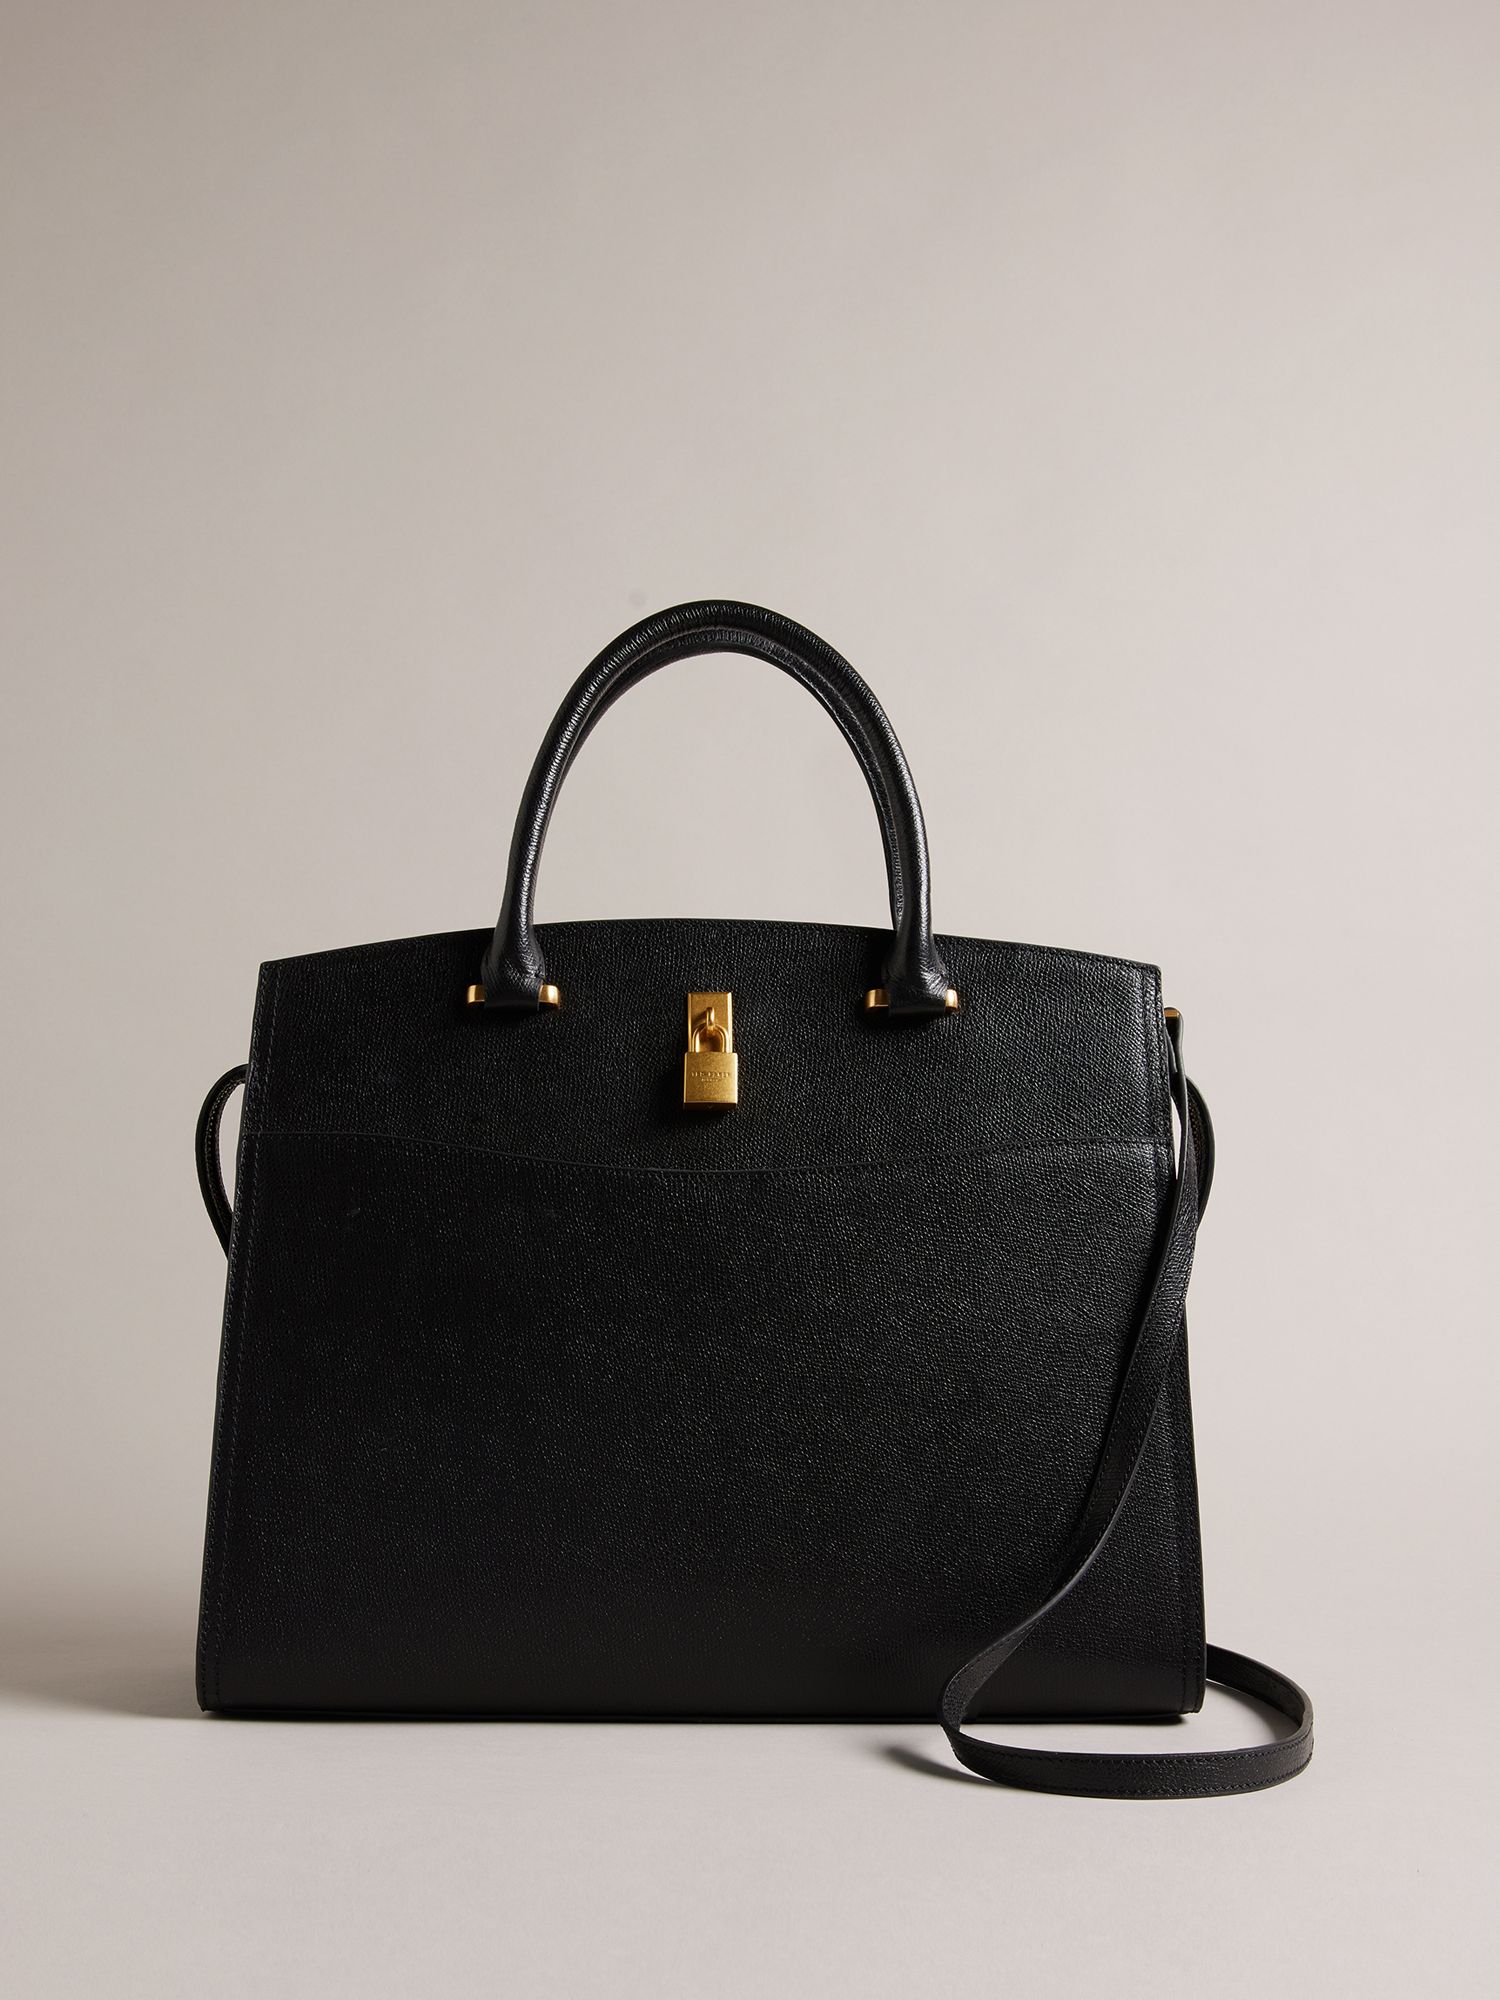 Ted Baker Richmon Large Leather Padlock Handbag, Black at John Lewis ...